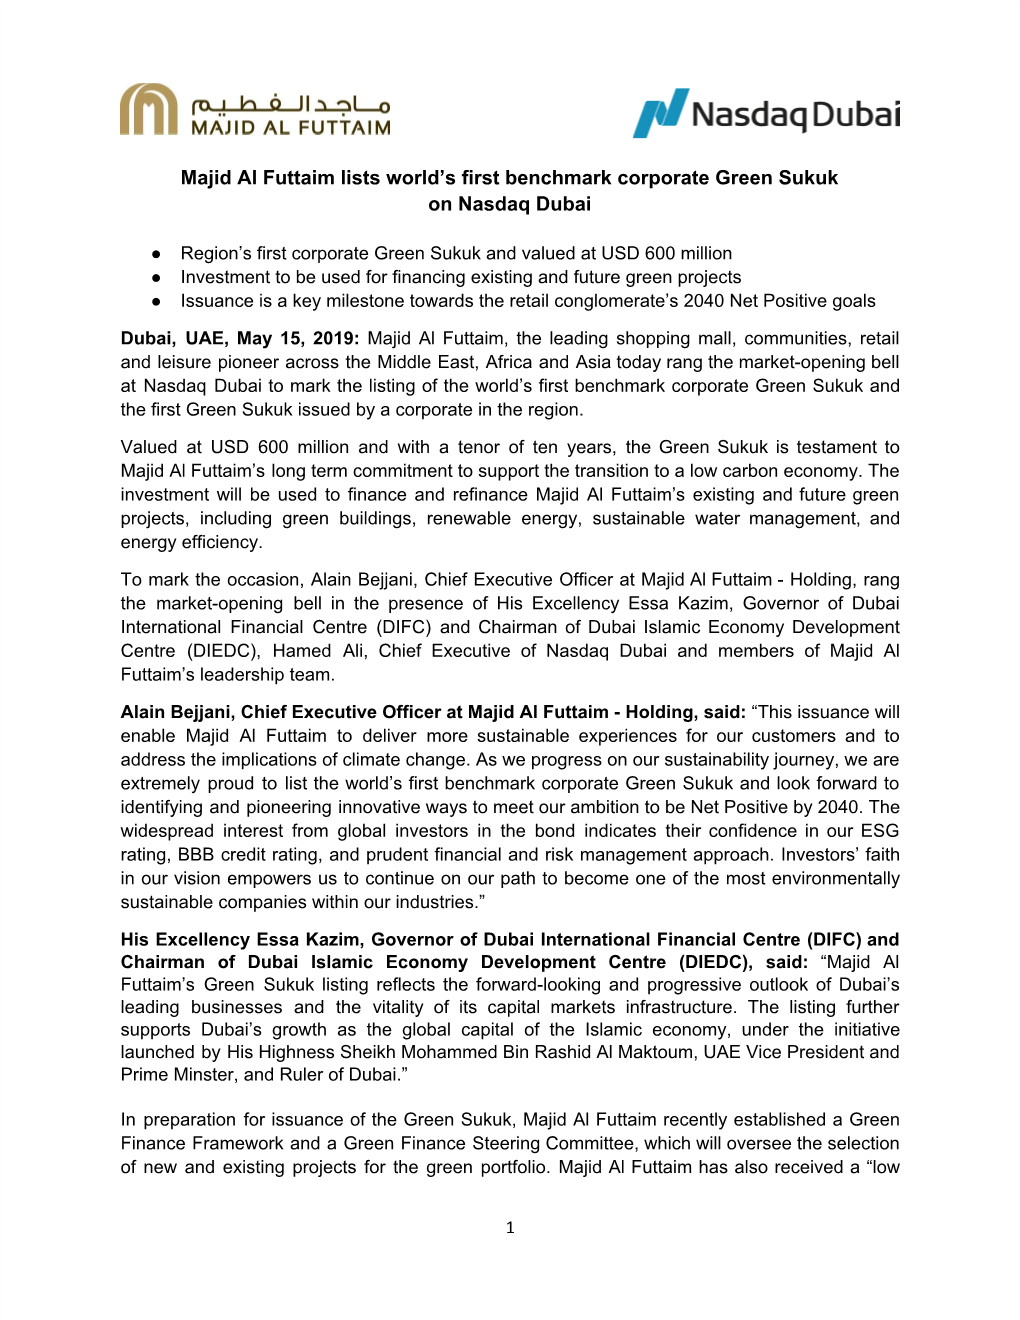 Majid Al Futtaim Lists World's First Benchmark Corporate Green Sukuk